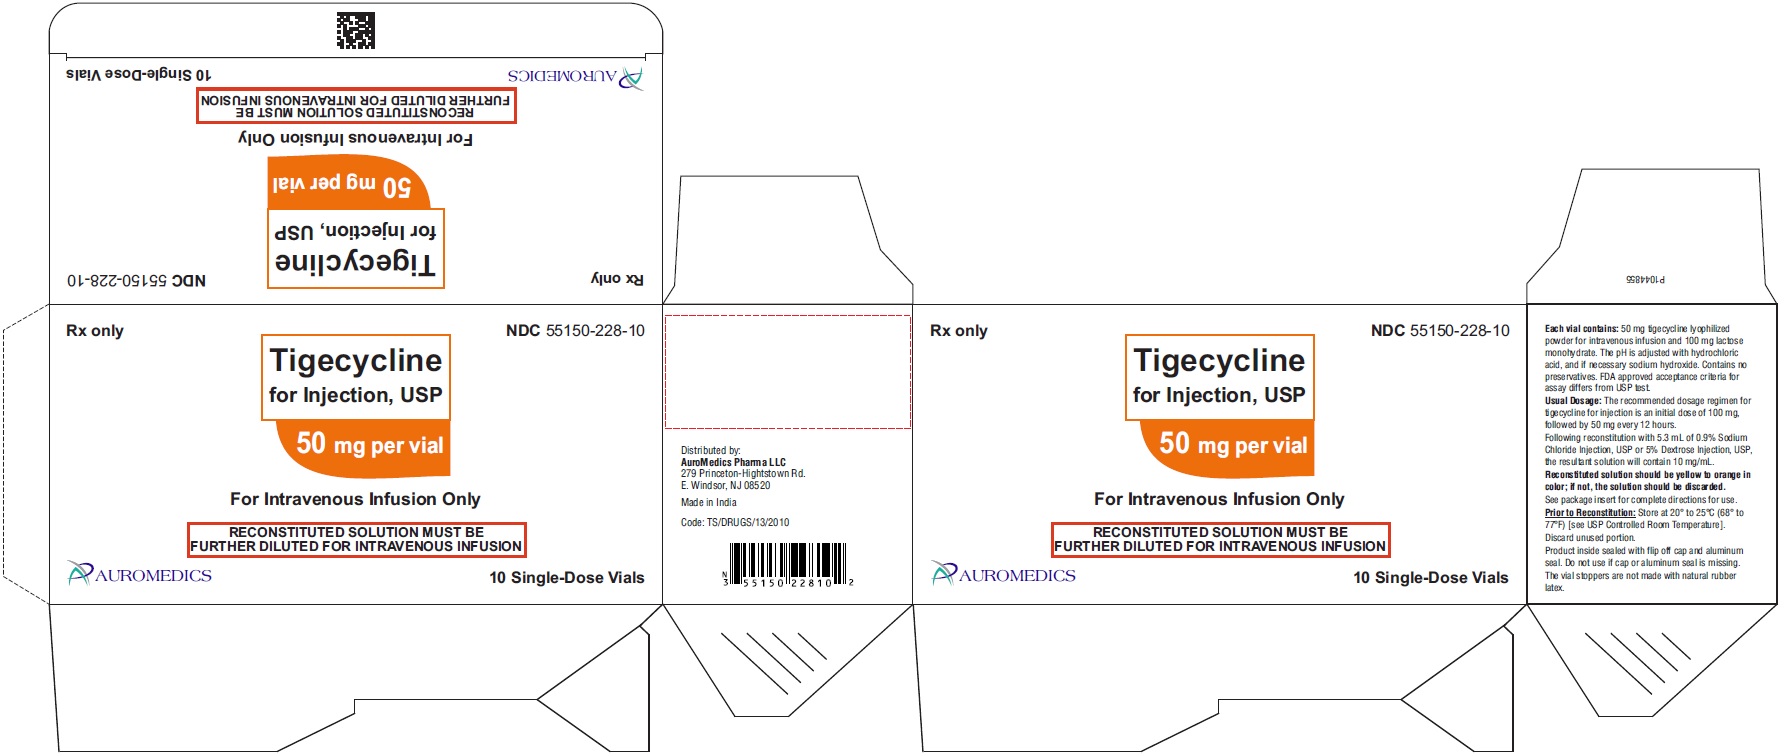 PACKAGE LABEL-PRINCIPAL DISPLAY PANEL - 50 mg per vial - Container-Carton (10 Vials)